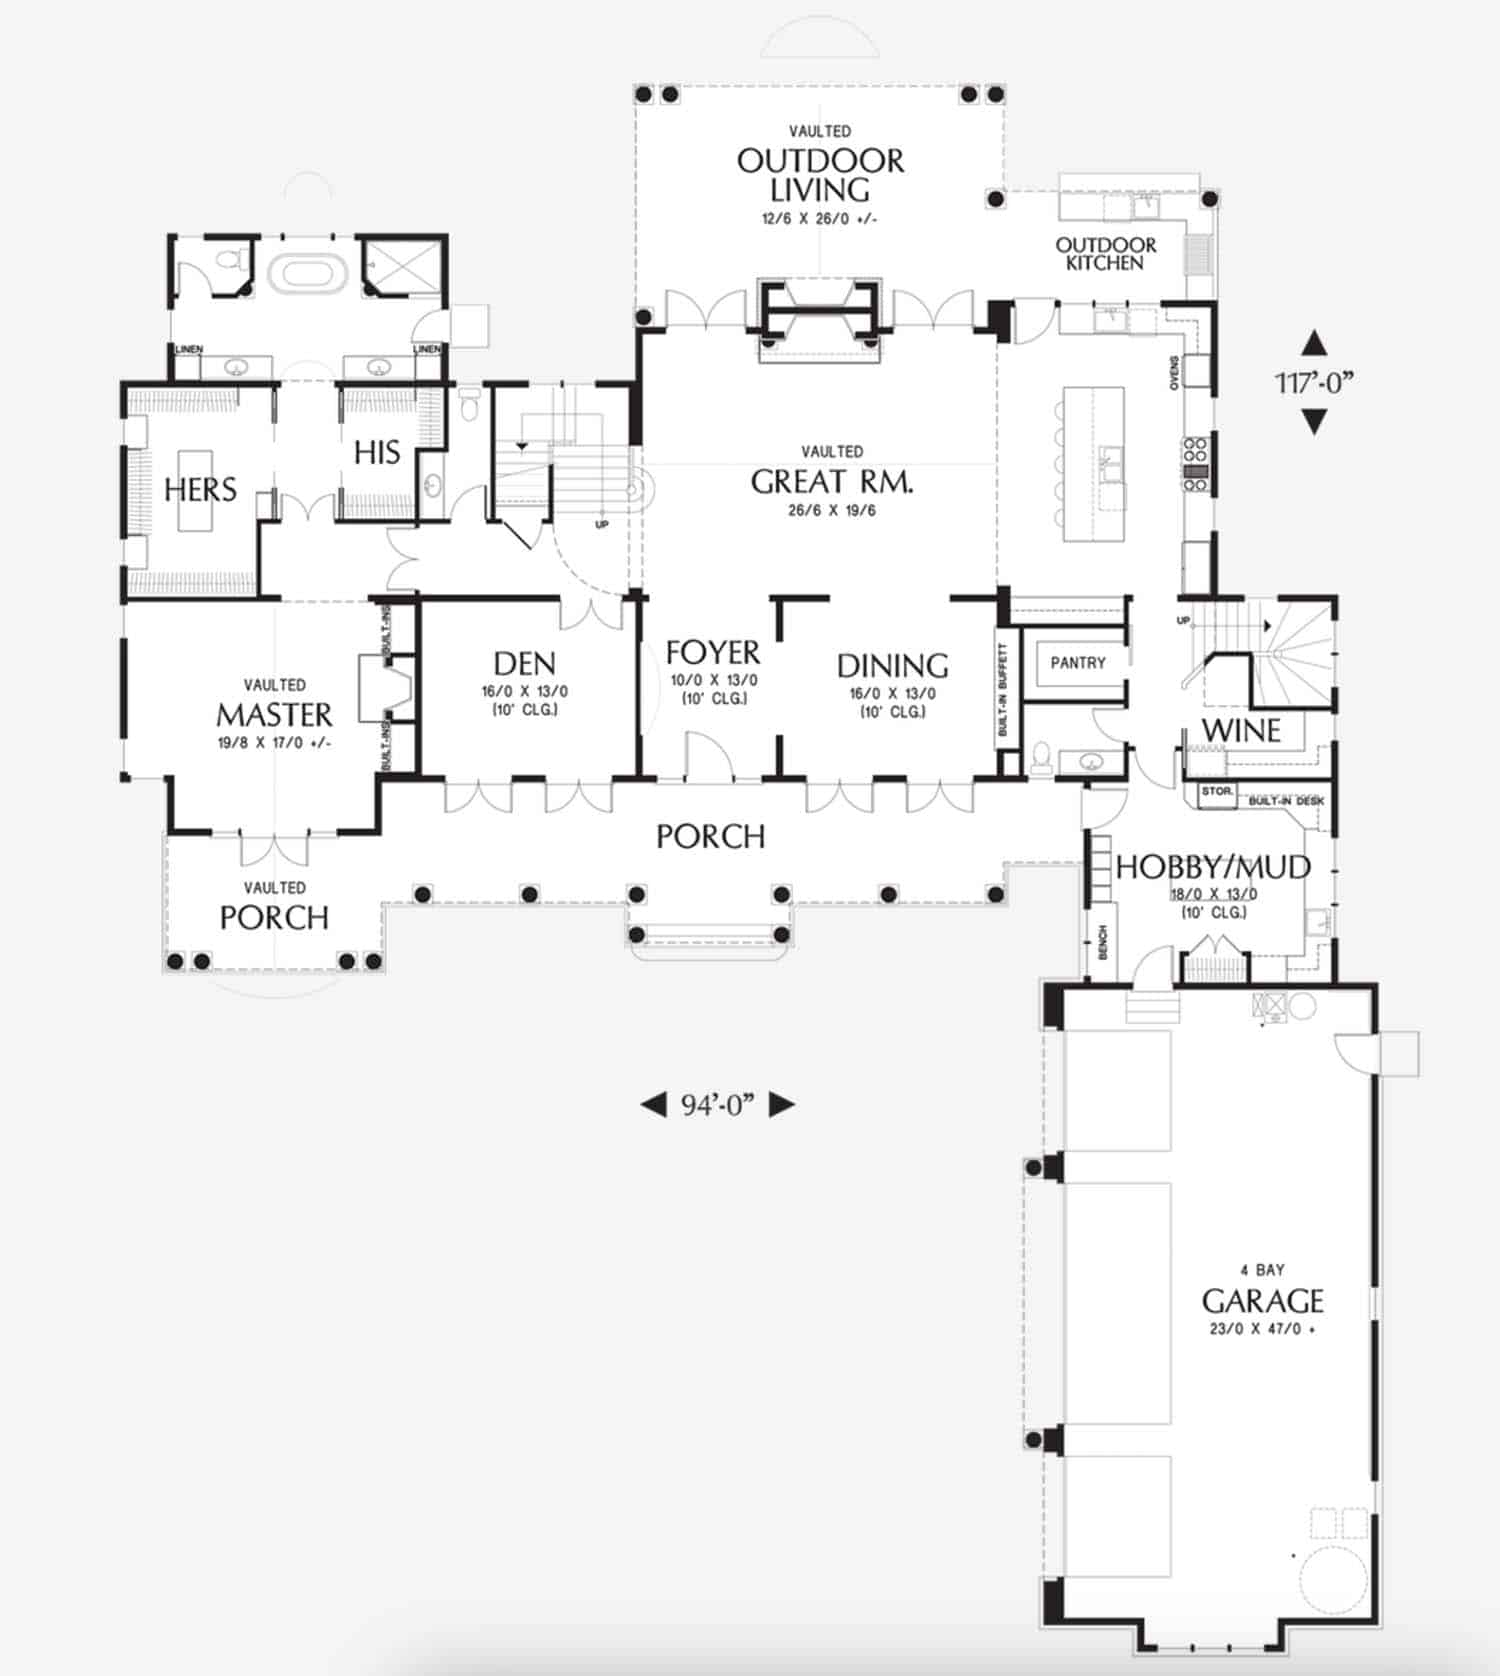 cape cod style dream home main level floor plan